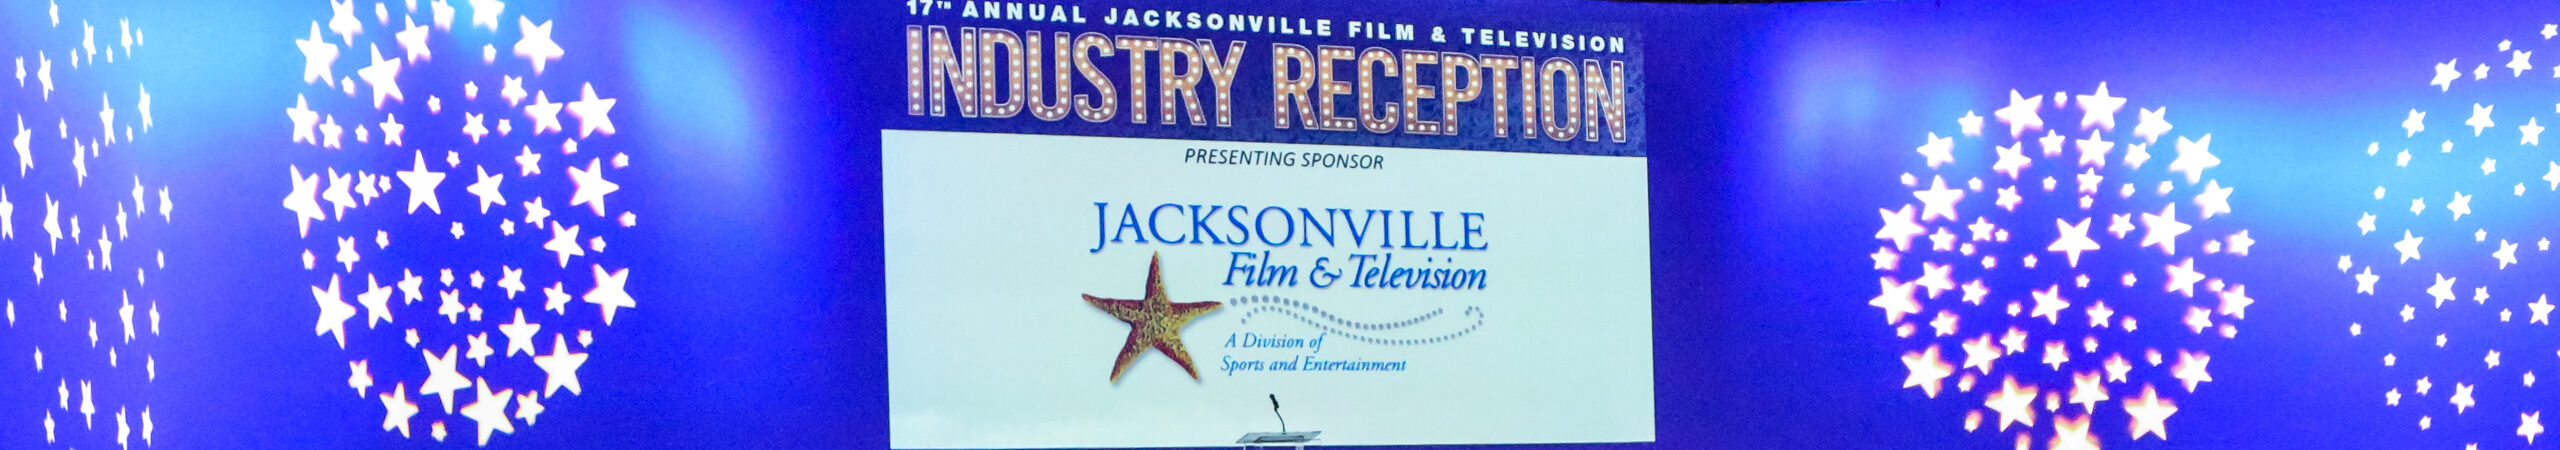 Jacksonville, FL Film & Television Reception